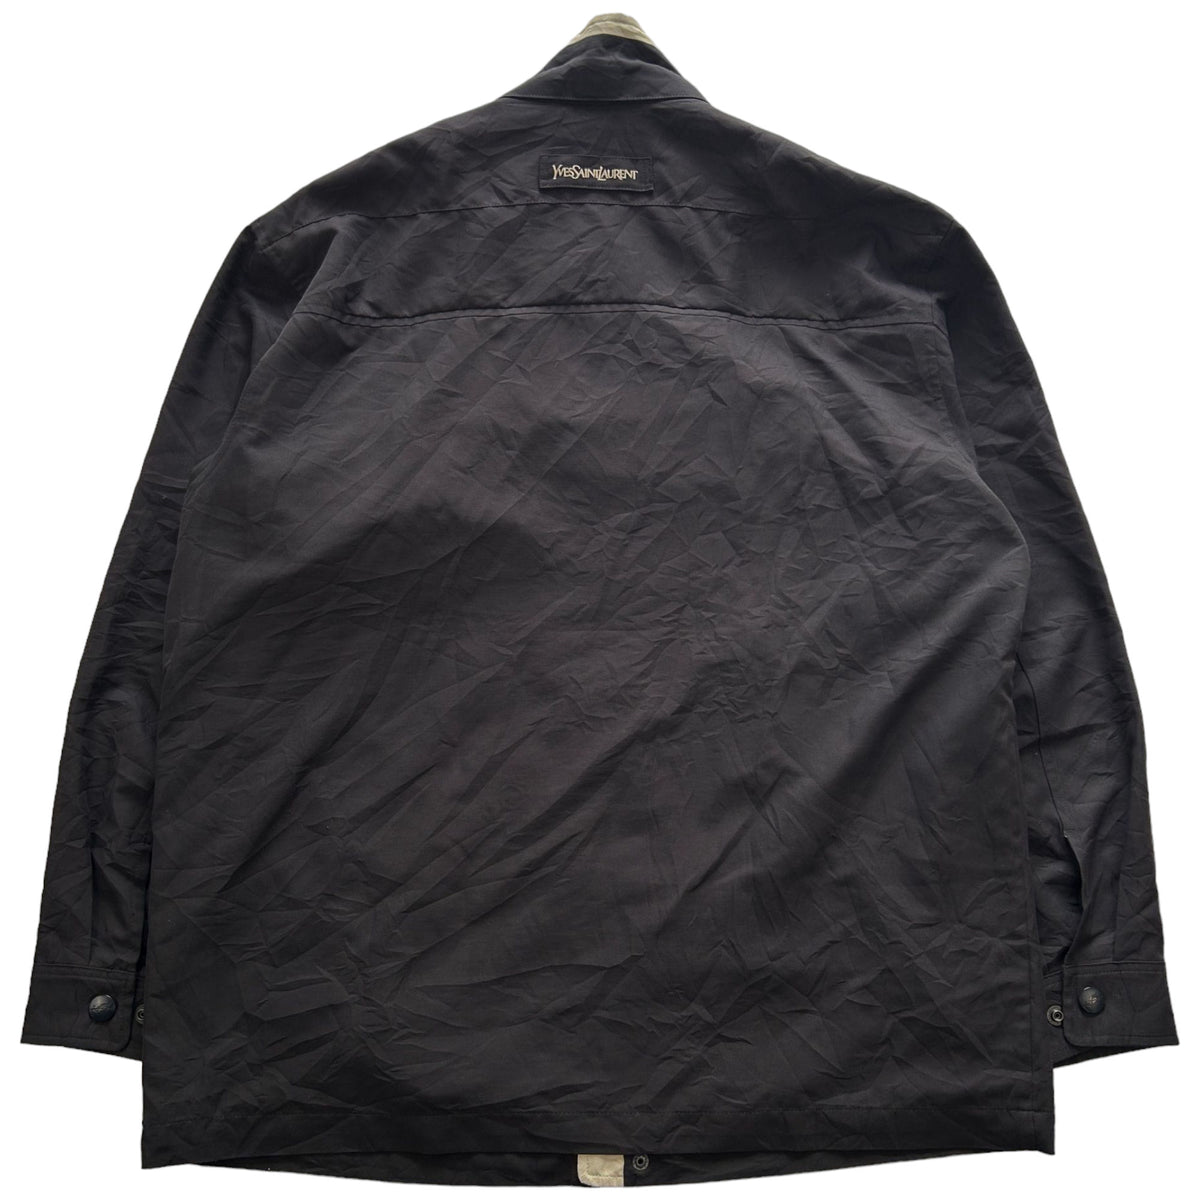 Vintage YSL Yves Saint Laurent Jacket Size L